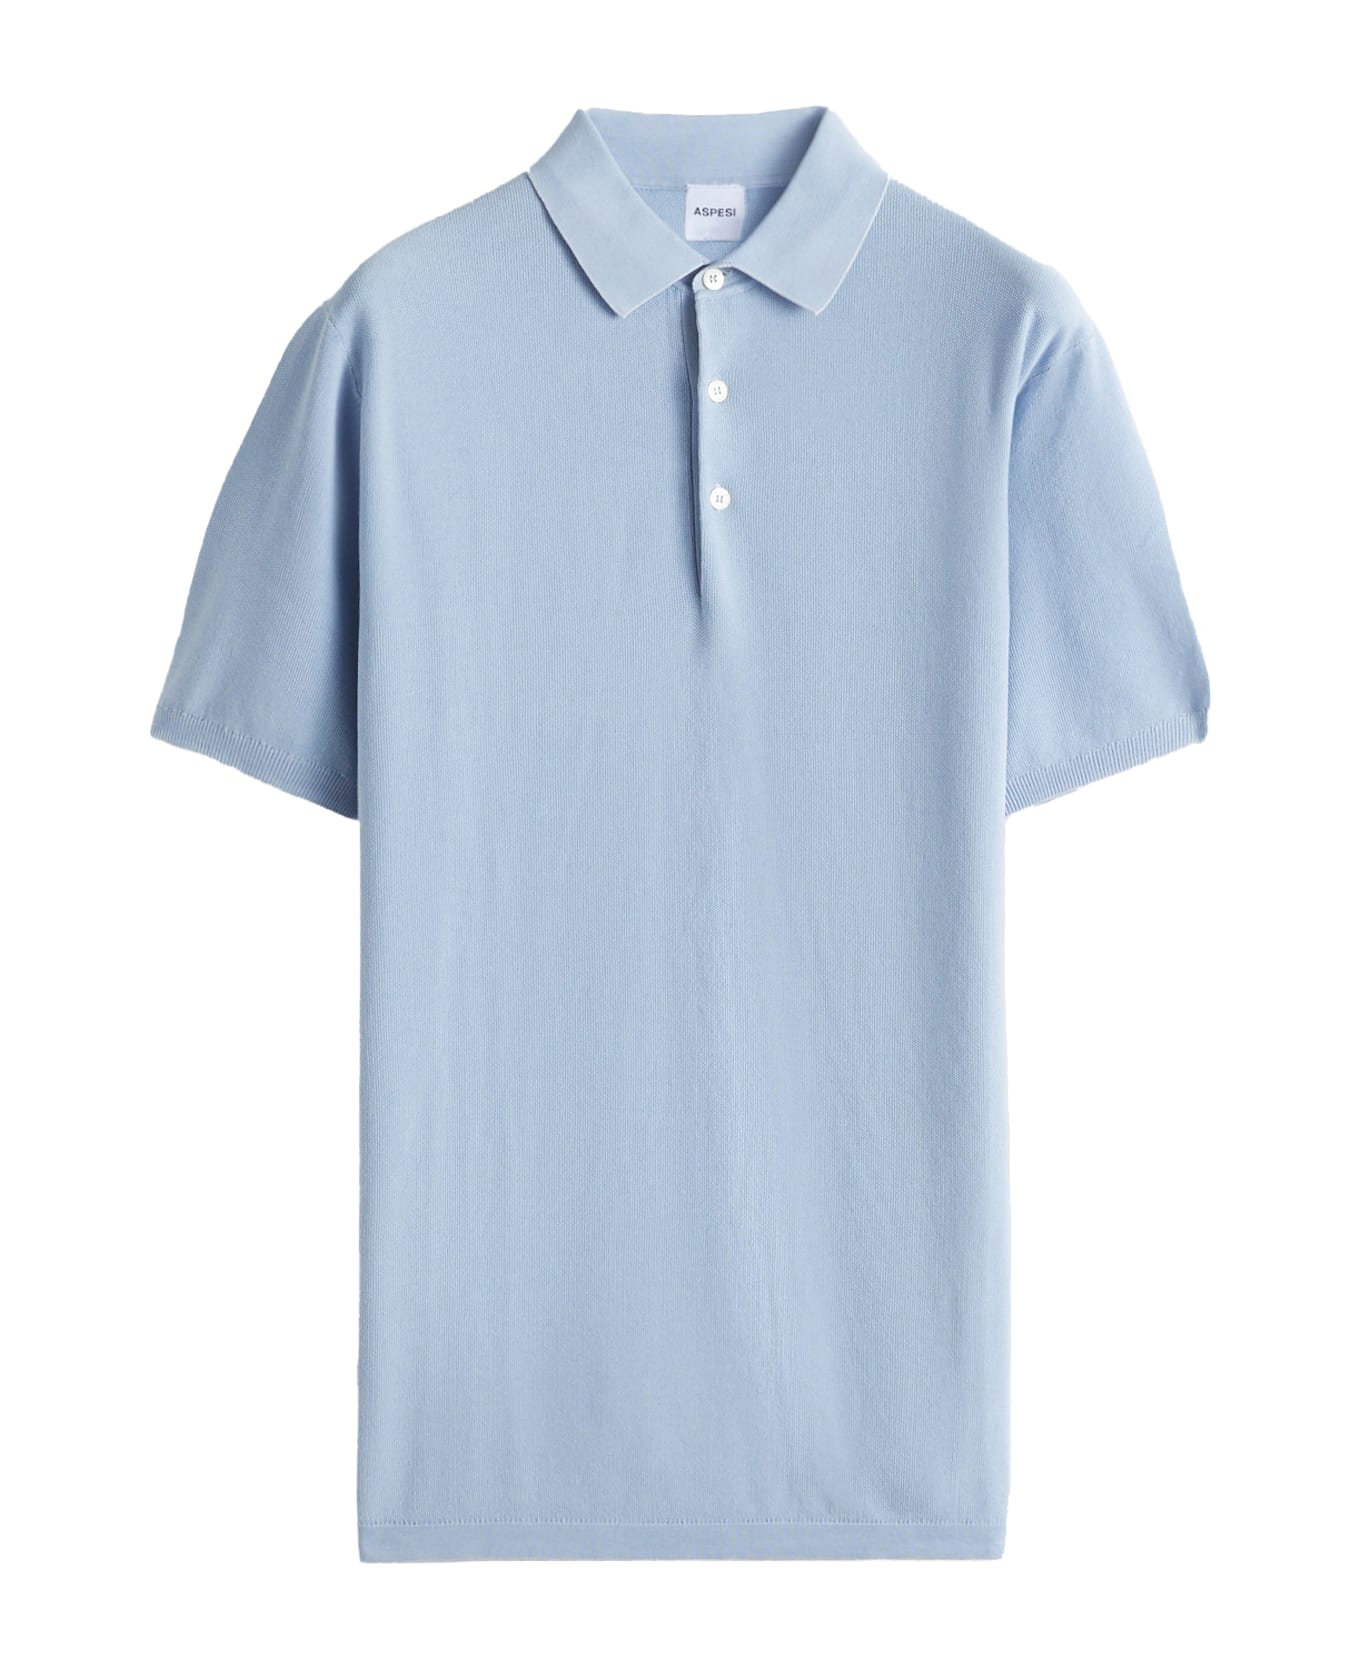 Aspesi Light Blue Short-sleeved Polo Shirt - AZZURRO